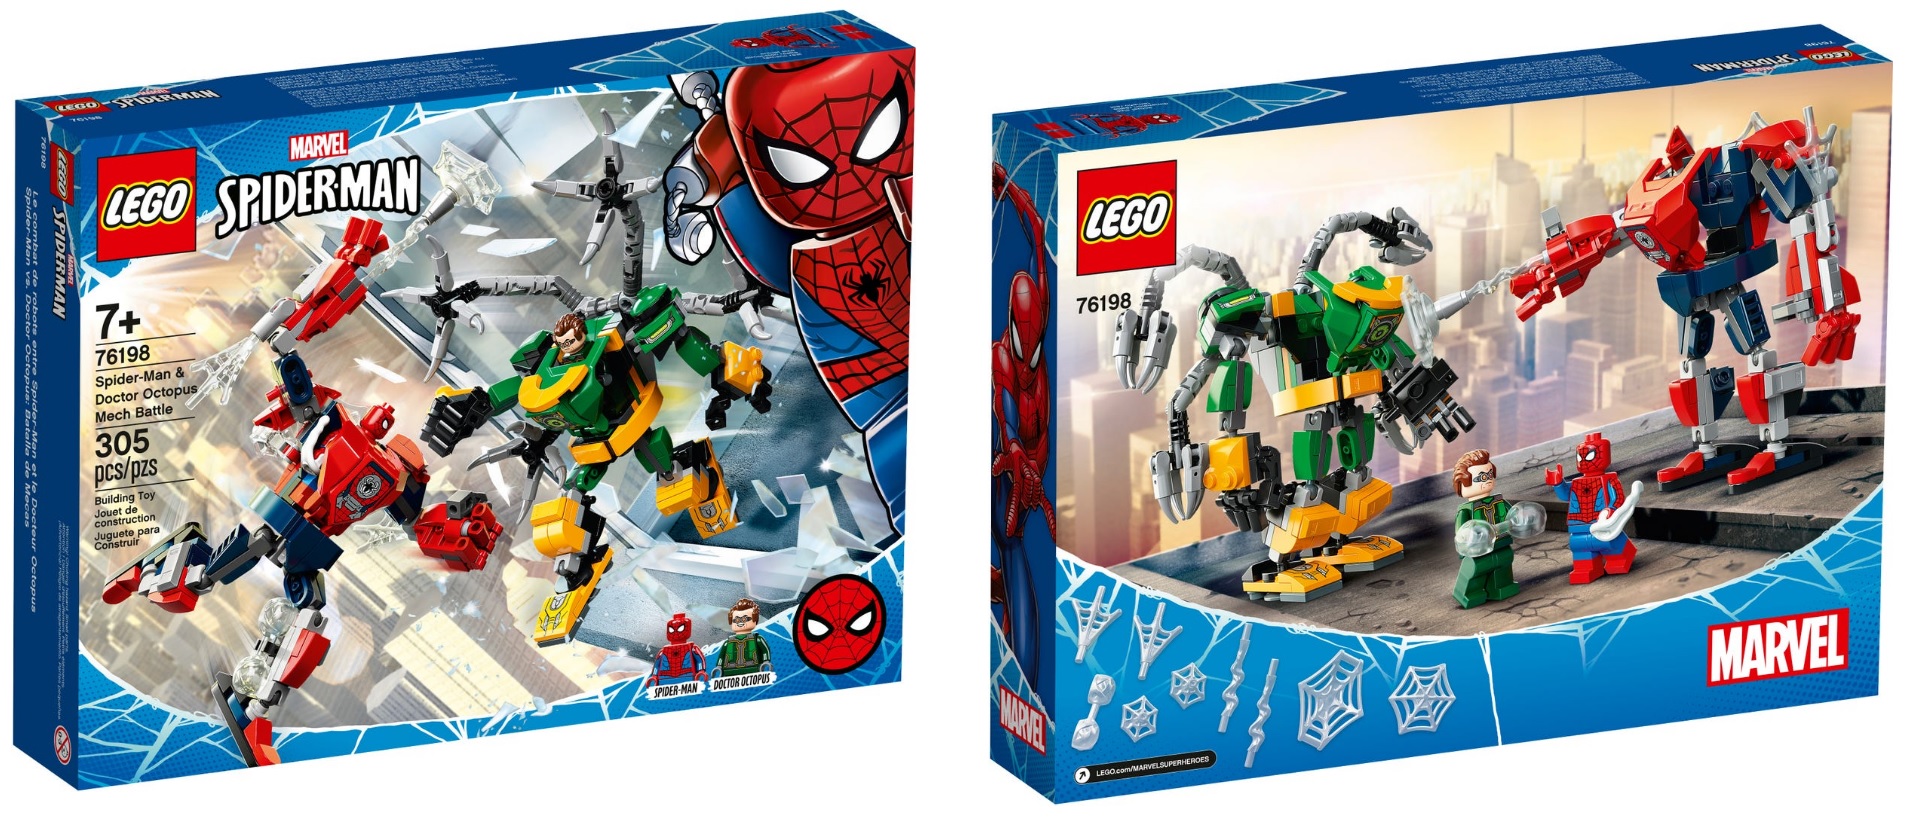 Marvel Super Heroes LEGO 76187 Venom Helmet Bust & 76198